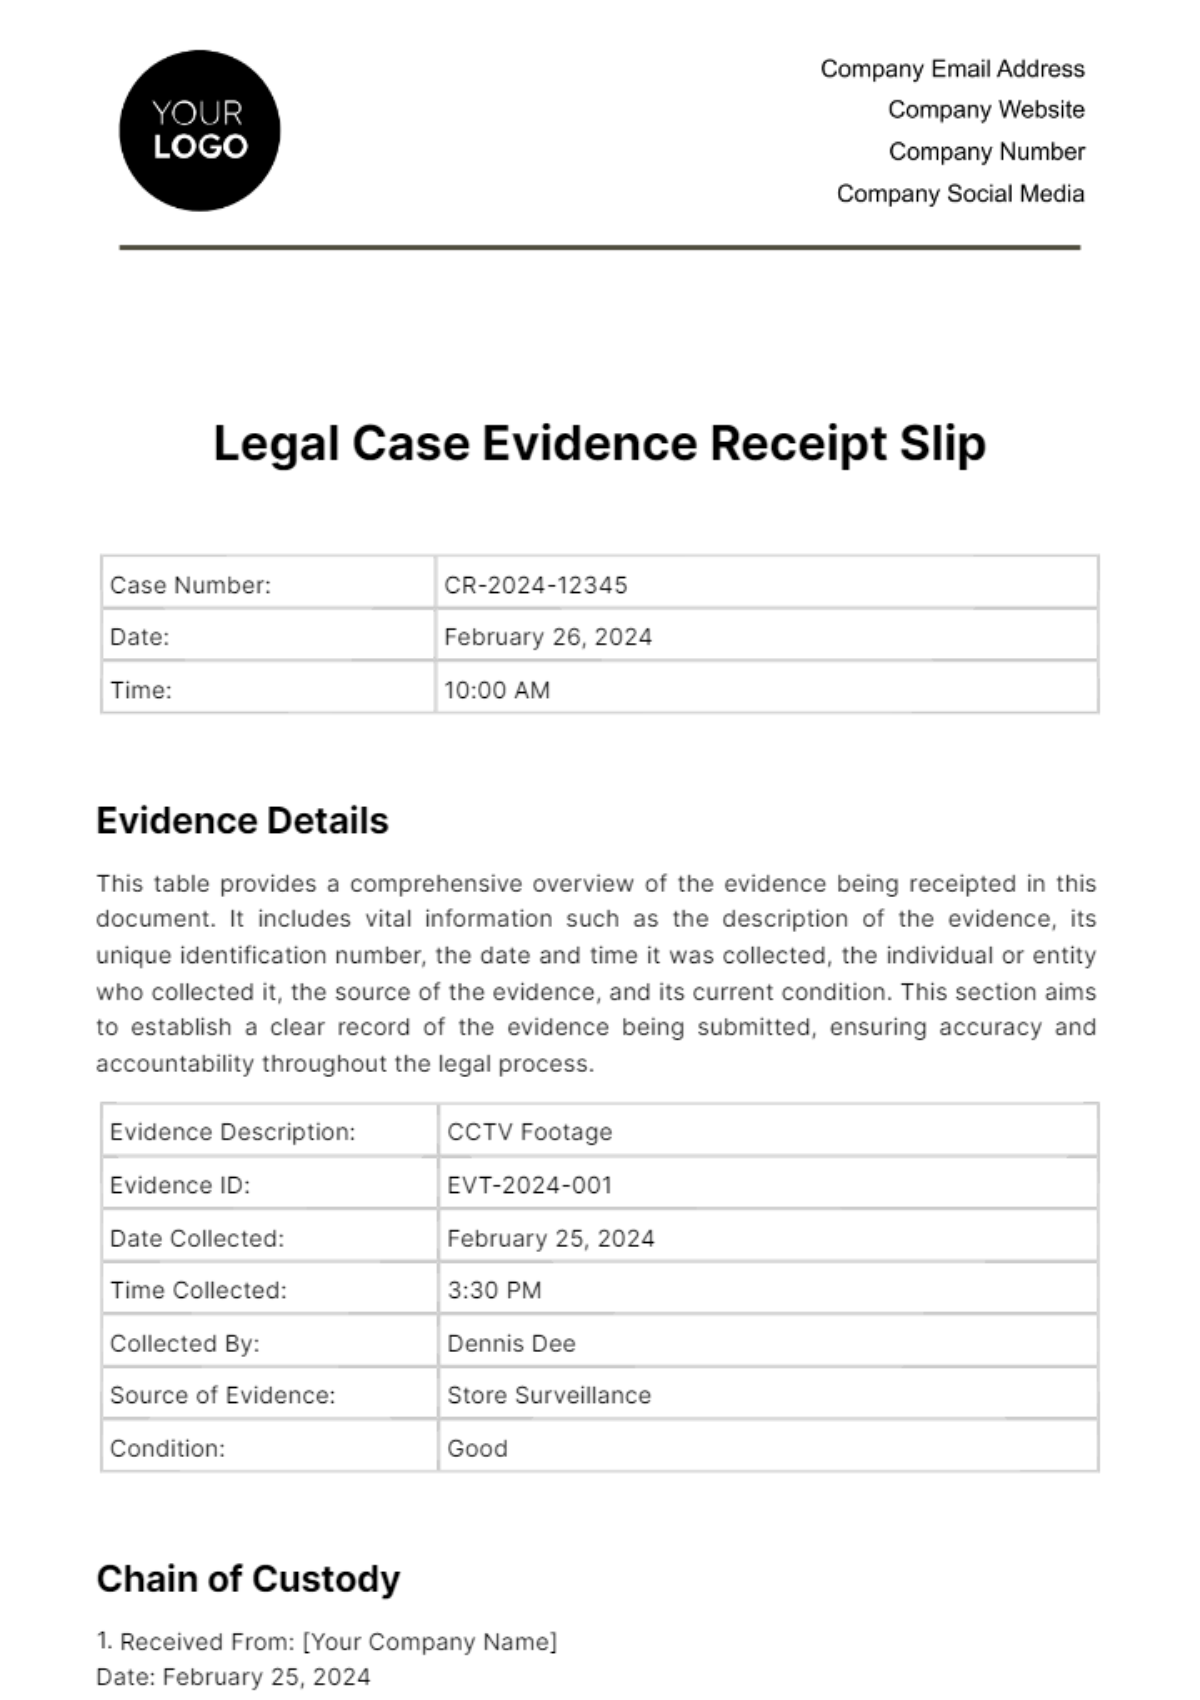 Legal Case Evidence Receipt Slip Template